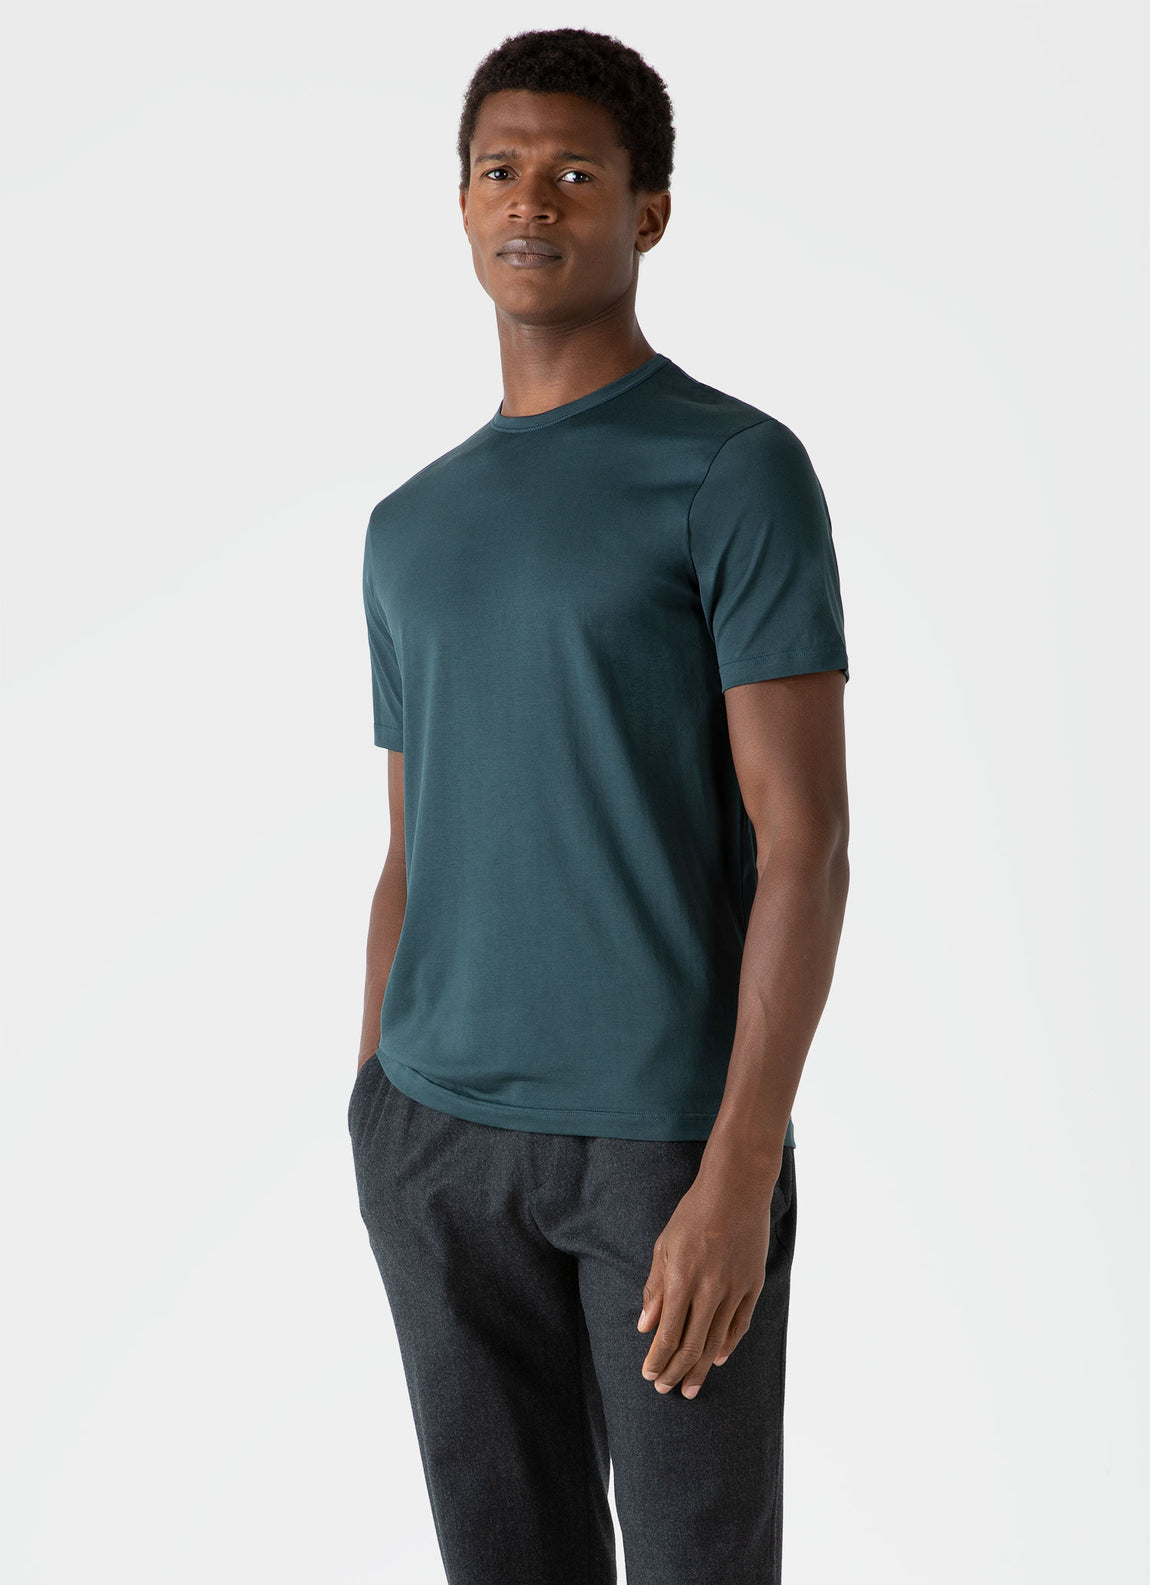 Men's Classic T-shirt in Peacock | Sunspel